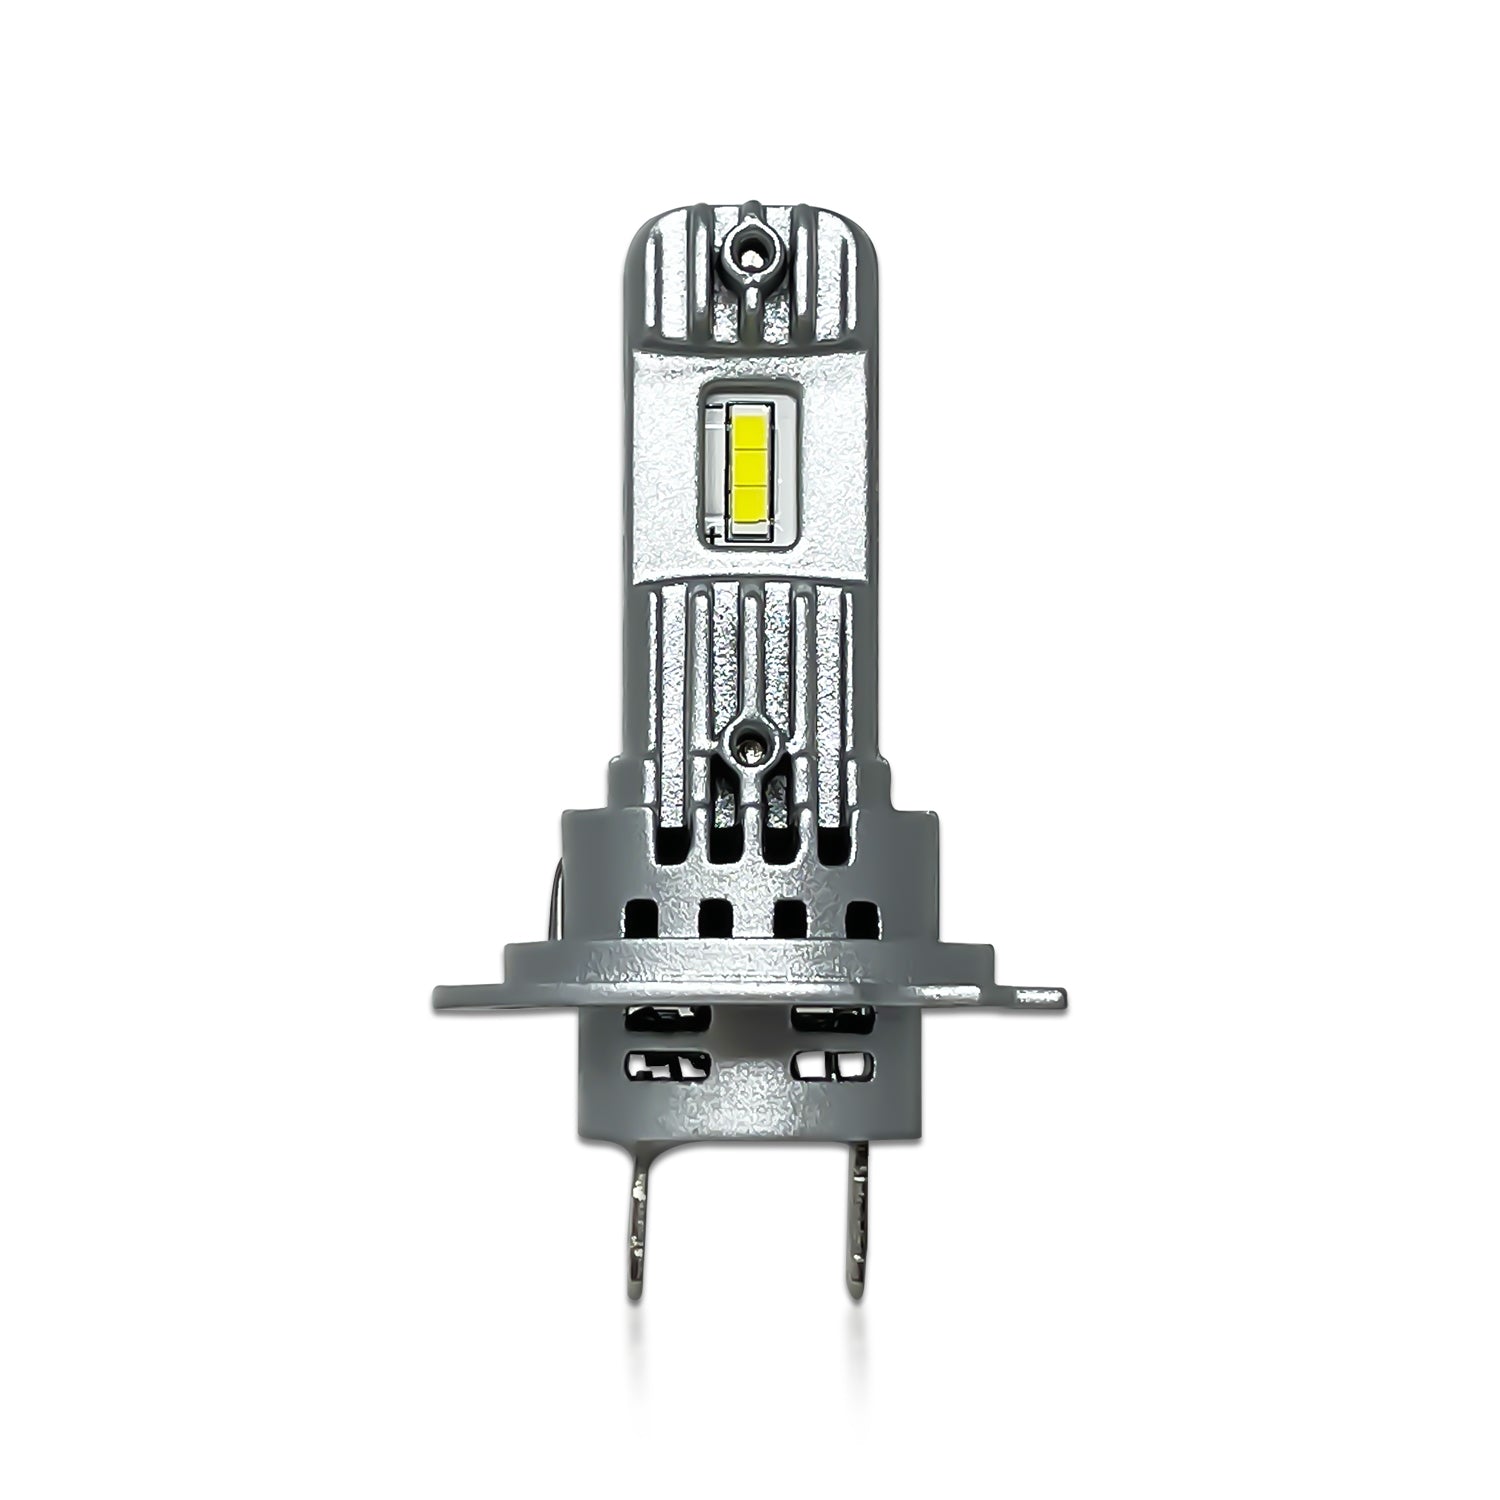 Osram 64210DWESY LEDriving Easy H7 H18 Bulb | HID Concept